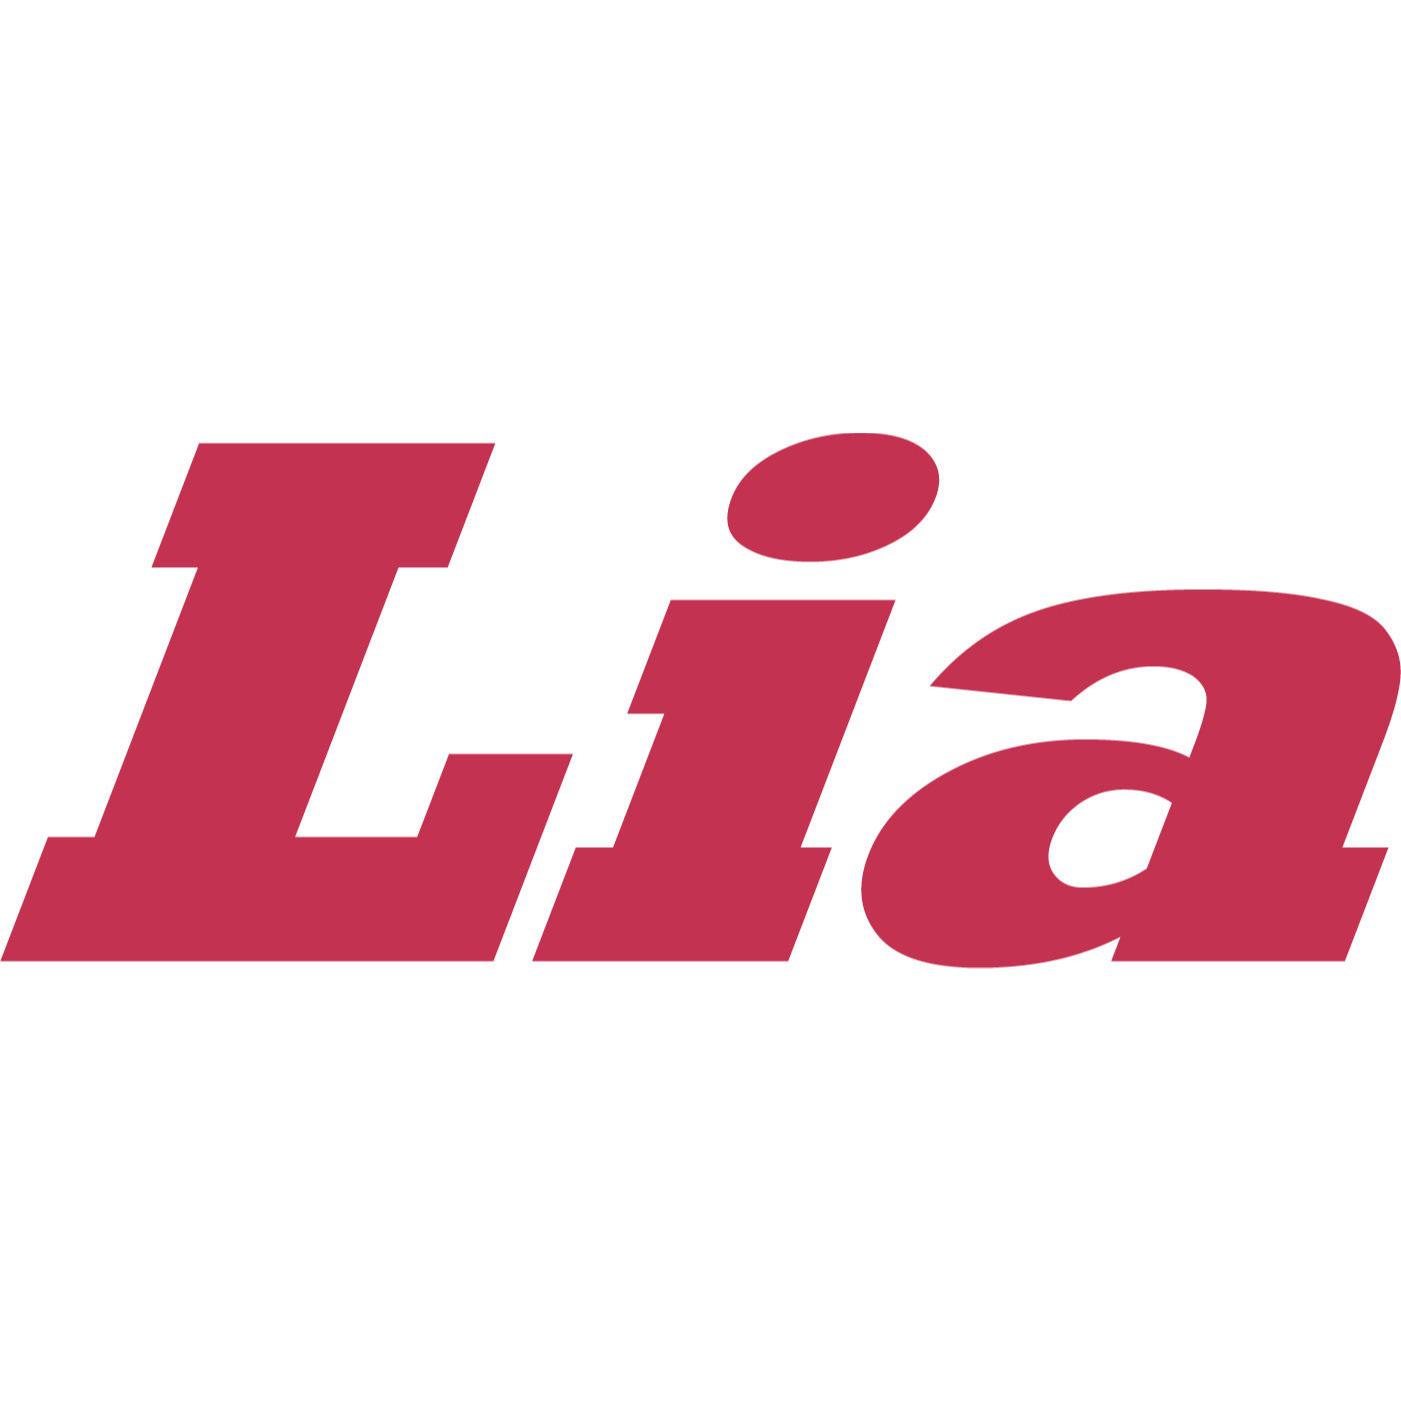 Lia Nissan Colonie Parts Department - Schenectady, NY 12304 - (518)478-6586 | ShowMeLocal.com